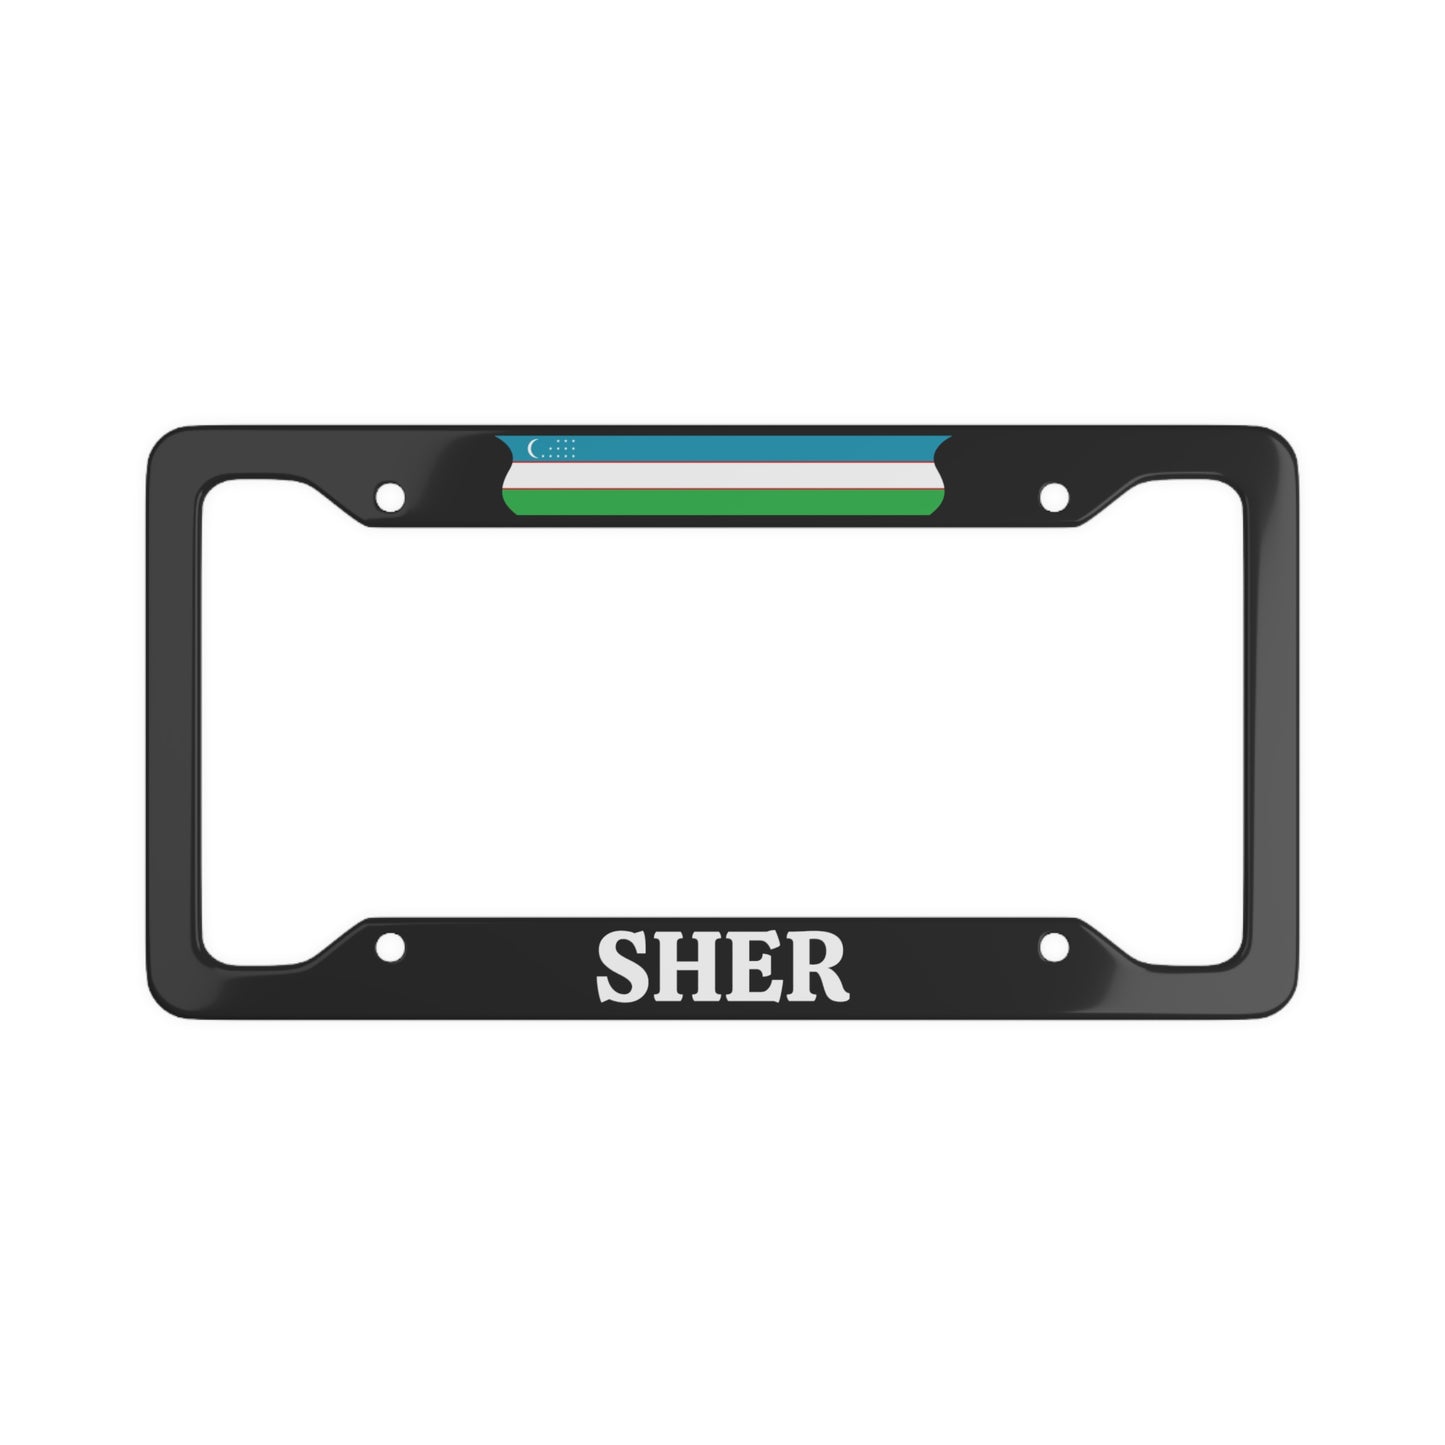 Sher License Plate Frame